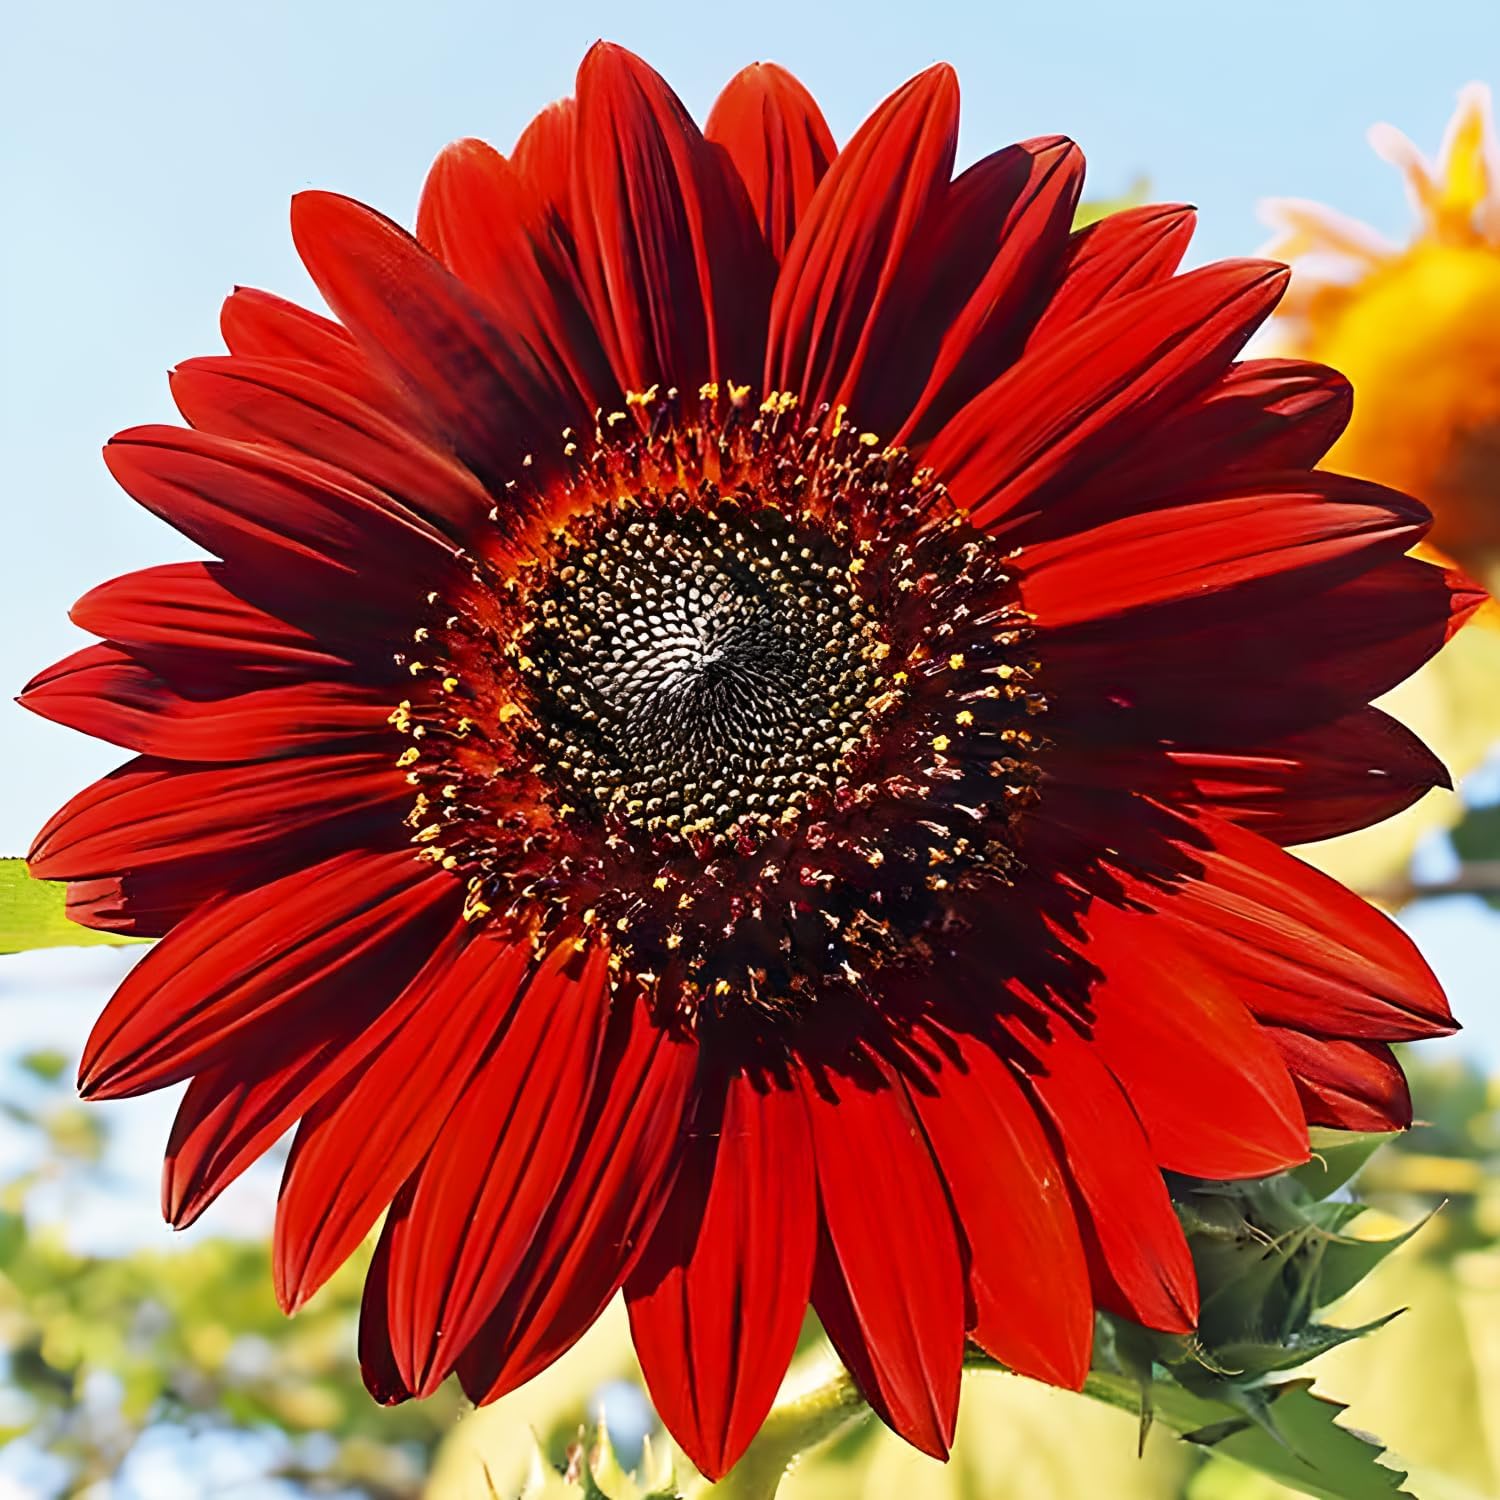 25 Red Velvet Queen Sunflower Seeds – Sunflower Seeds for Planting – Garden Plant – Sunflower Seeds – Garden Seed Sunflower Gifts – Non GMO Heirloom Sun Flower Seeds for Planting Outdoors